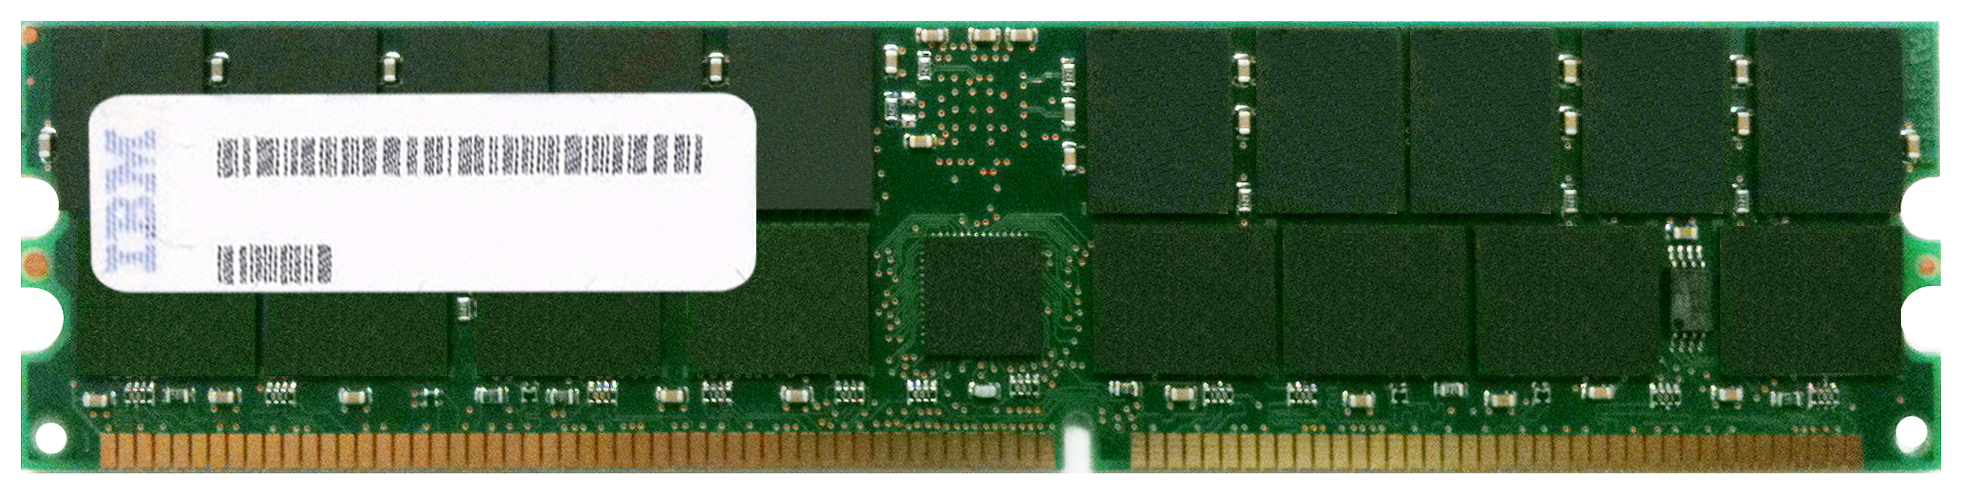 7893-9117 IBM Chipkill 4GB Kit (4 X 1GB) PC2-4200 DDR2-533MHz ECC Registered CL4 276-Pin DIMM Memory